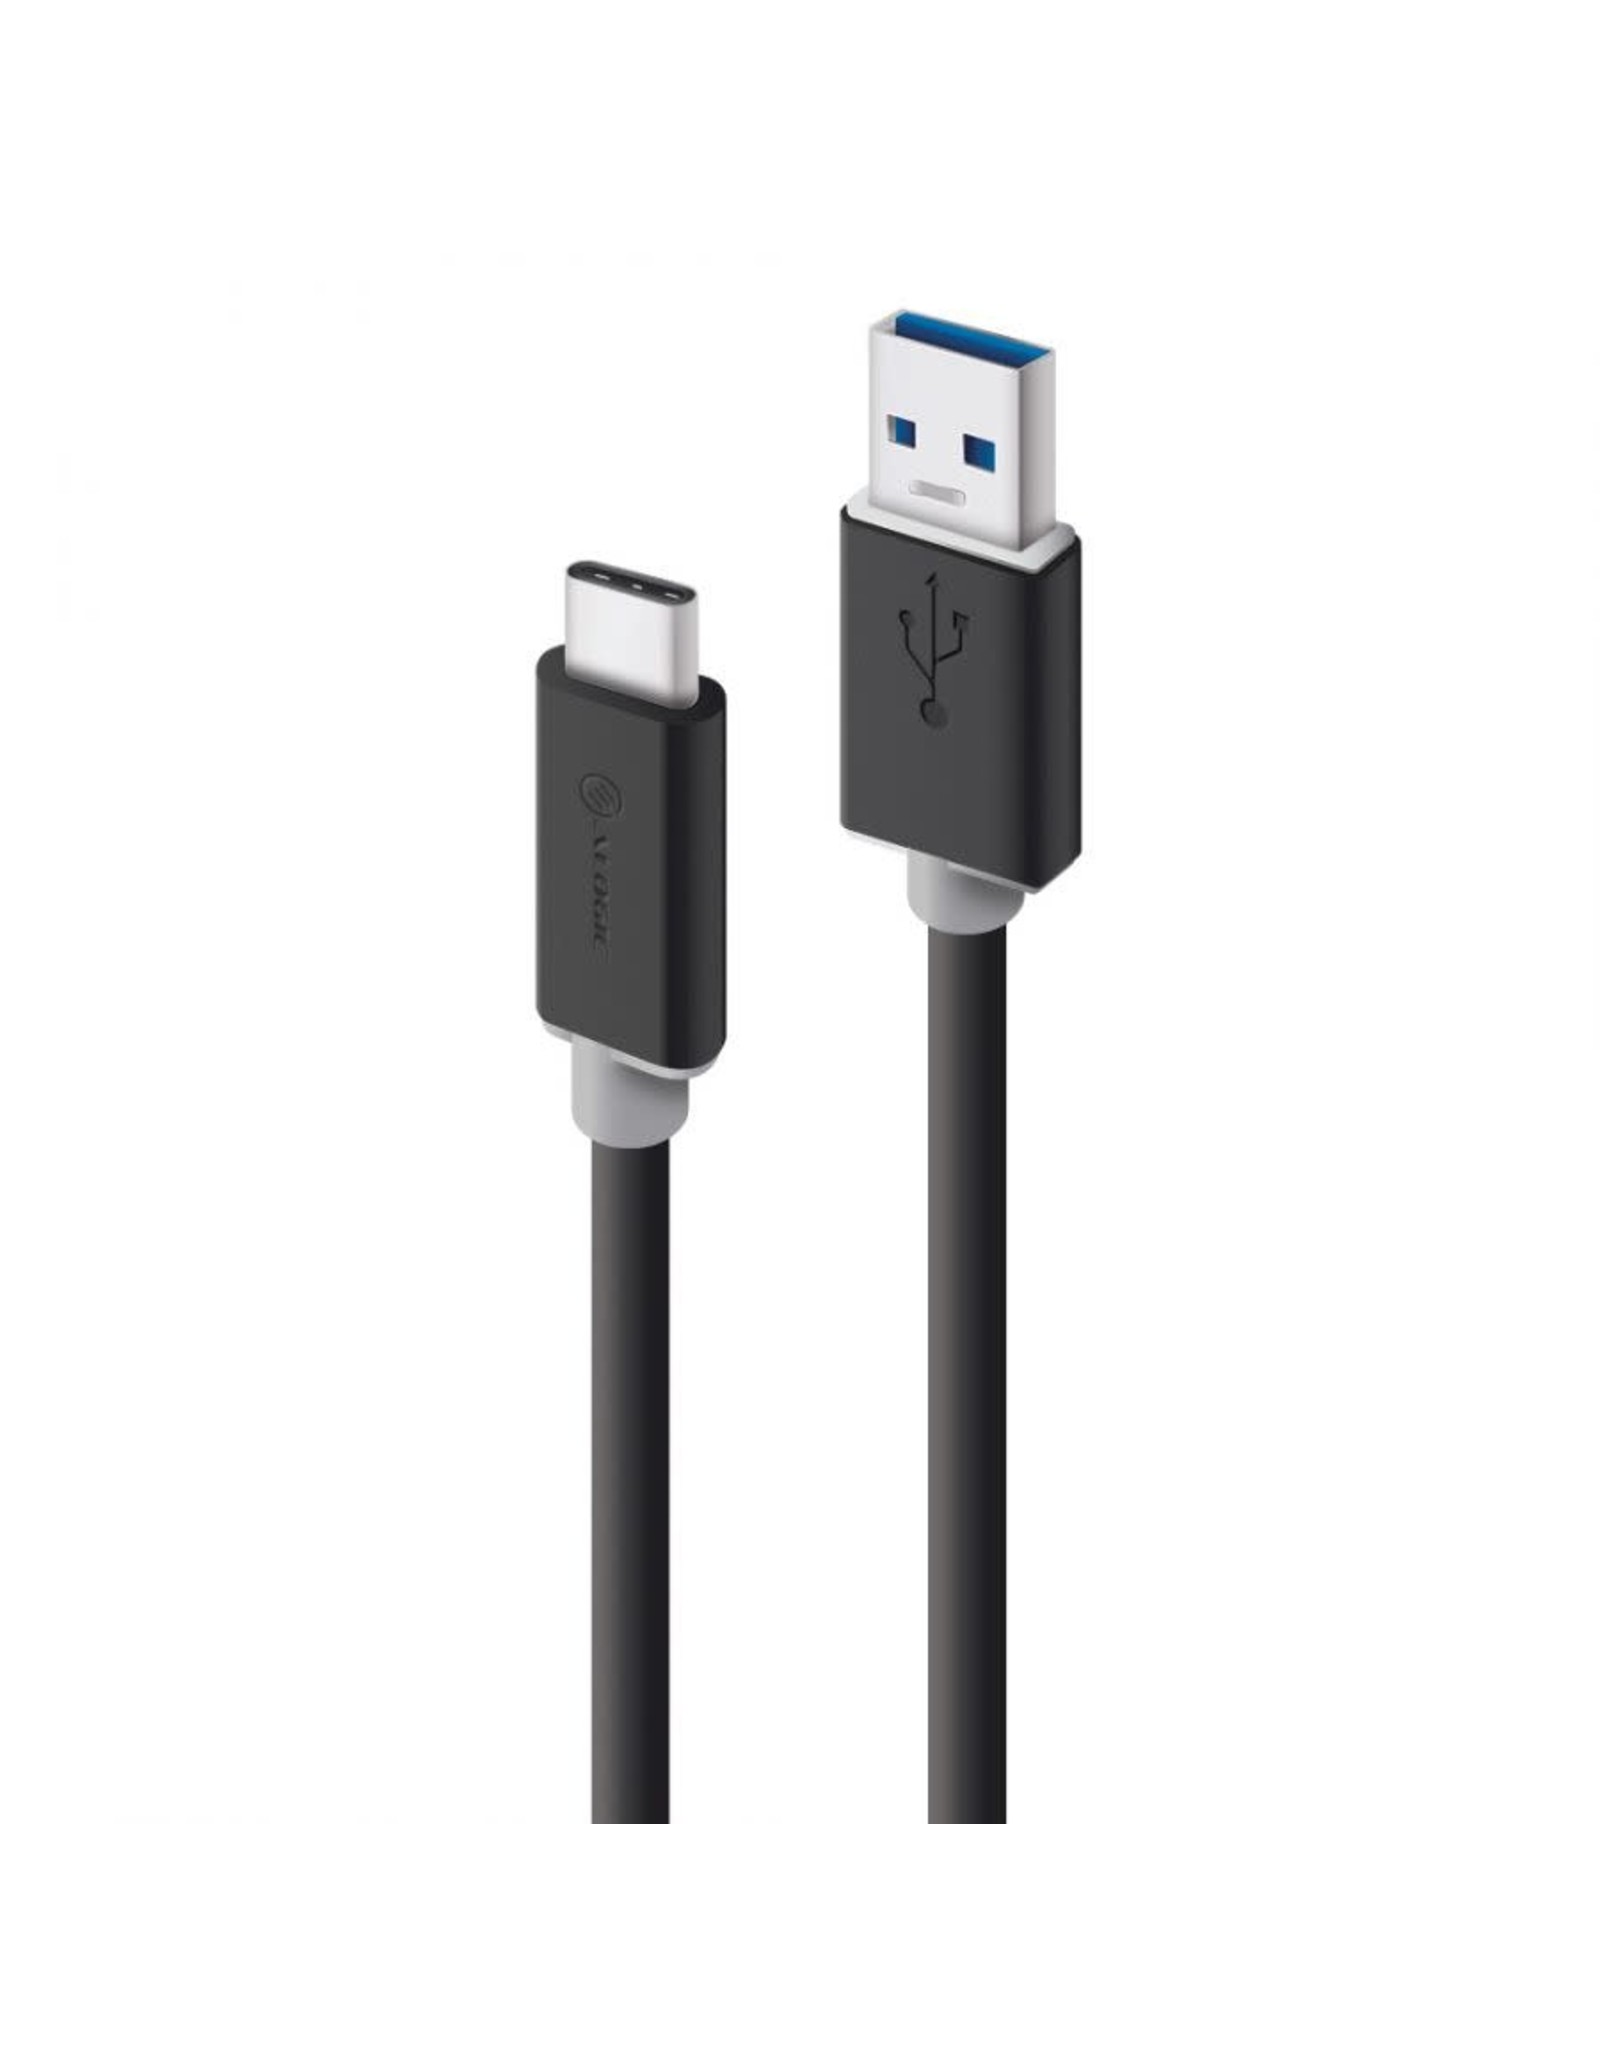 ALOGIC ALOGIC USB 3.1 USB-A to USB-C Cable 2m - Male to Male